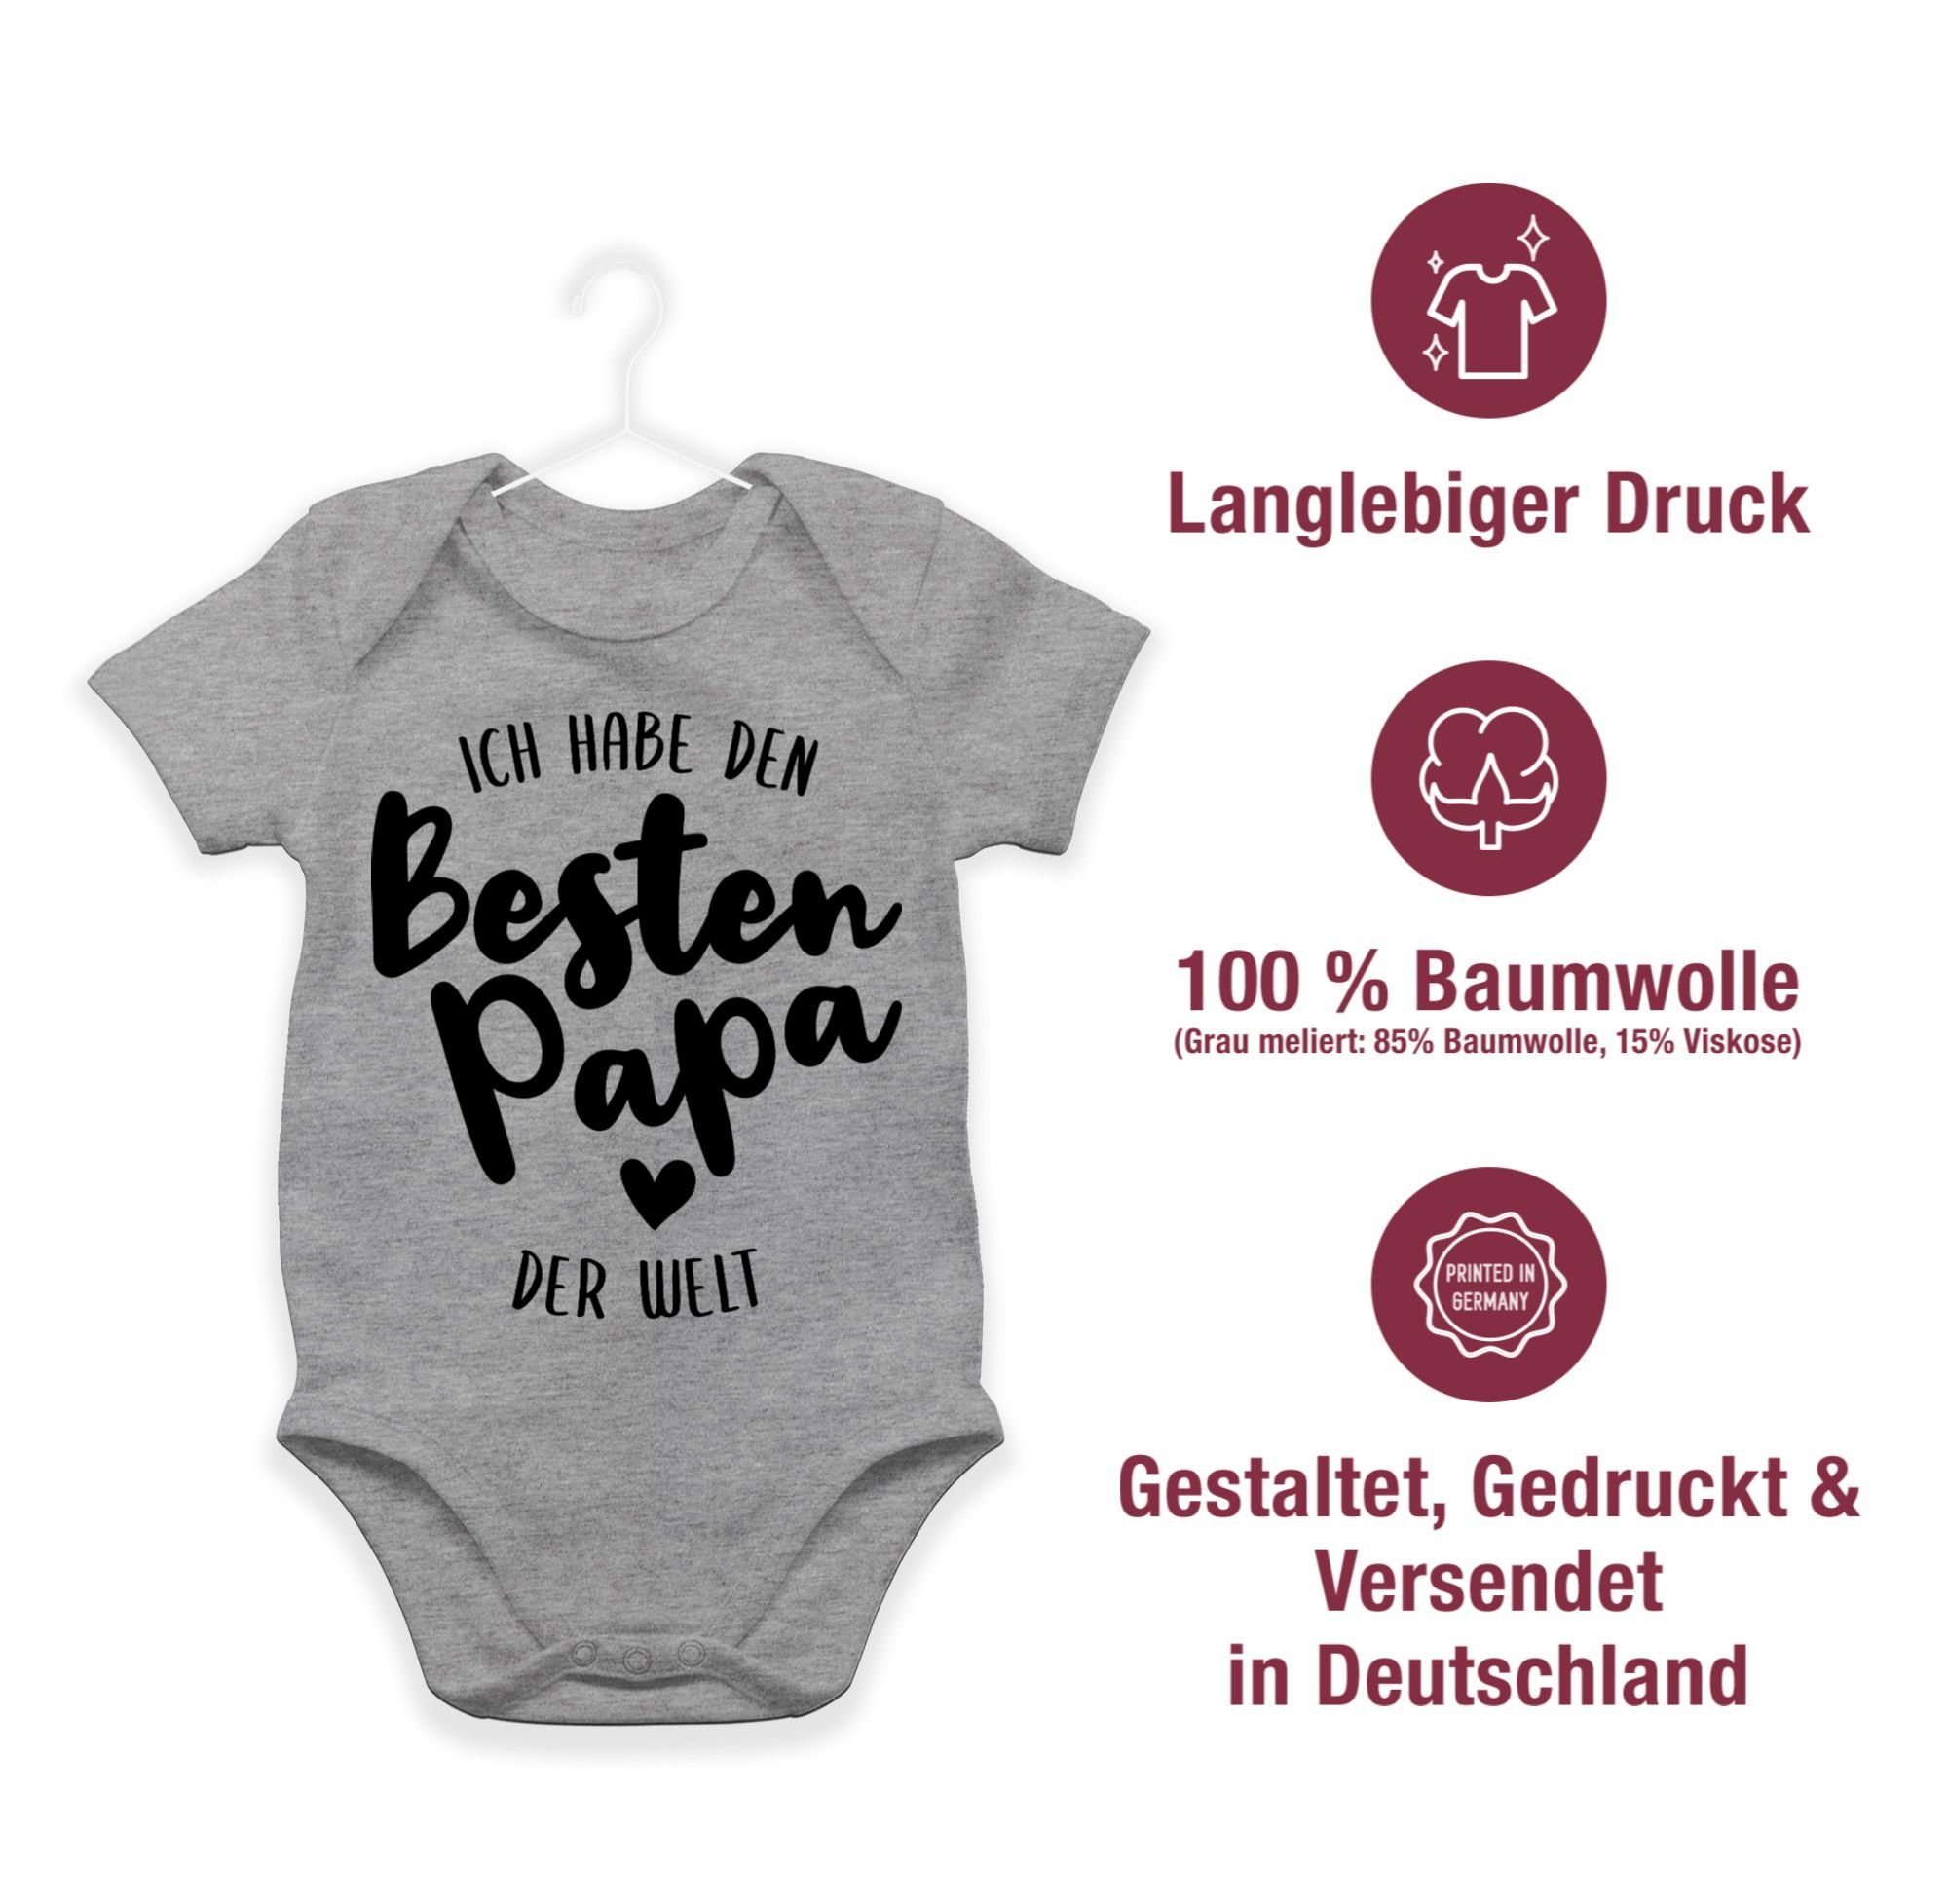 Shirtracer Shirtbody Besten der Geschenk I Welt meliert Papa Grau 1 Baby Vatertag